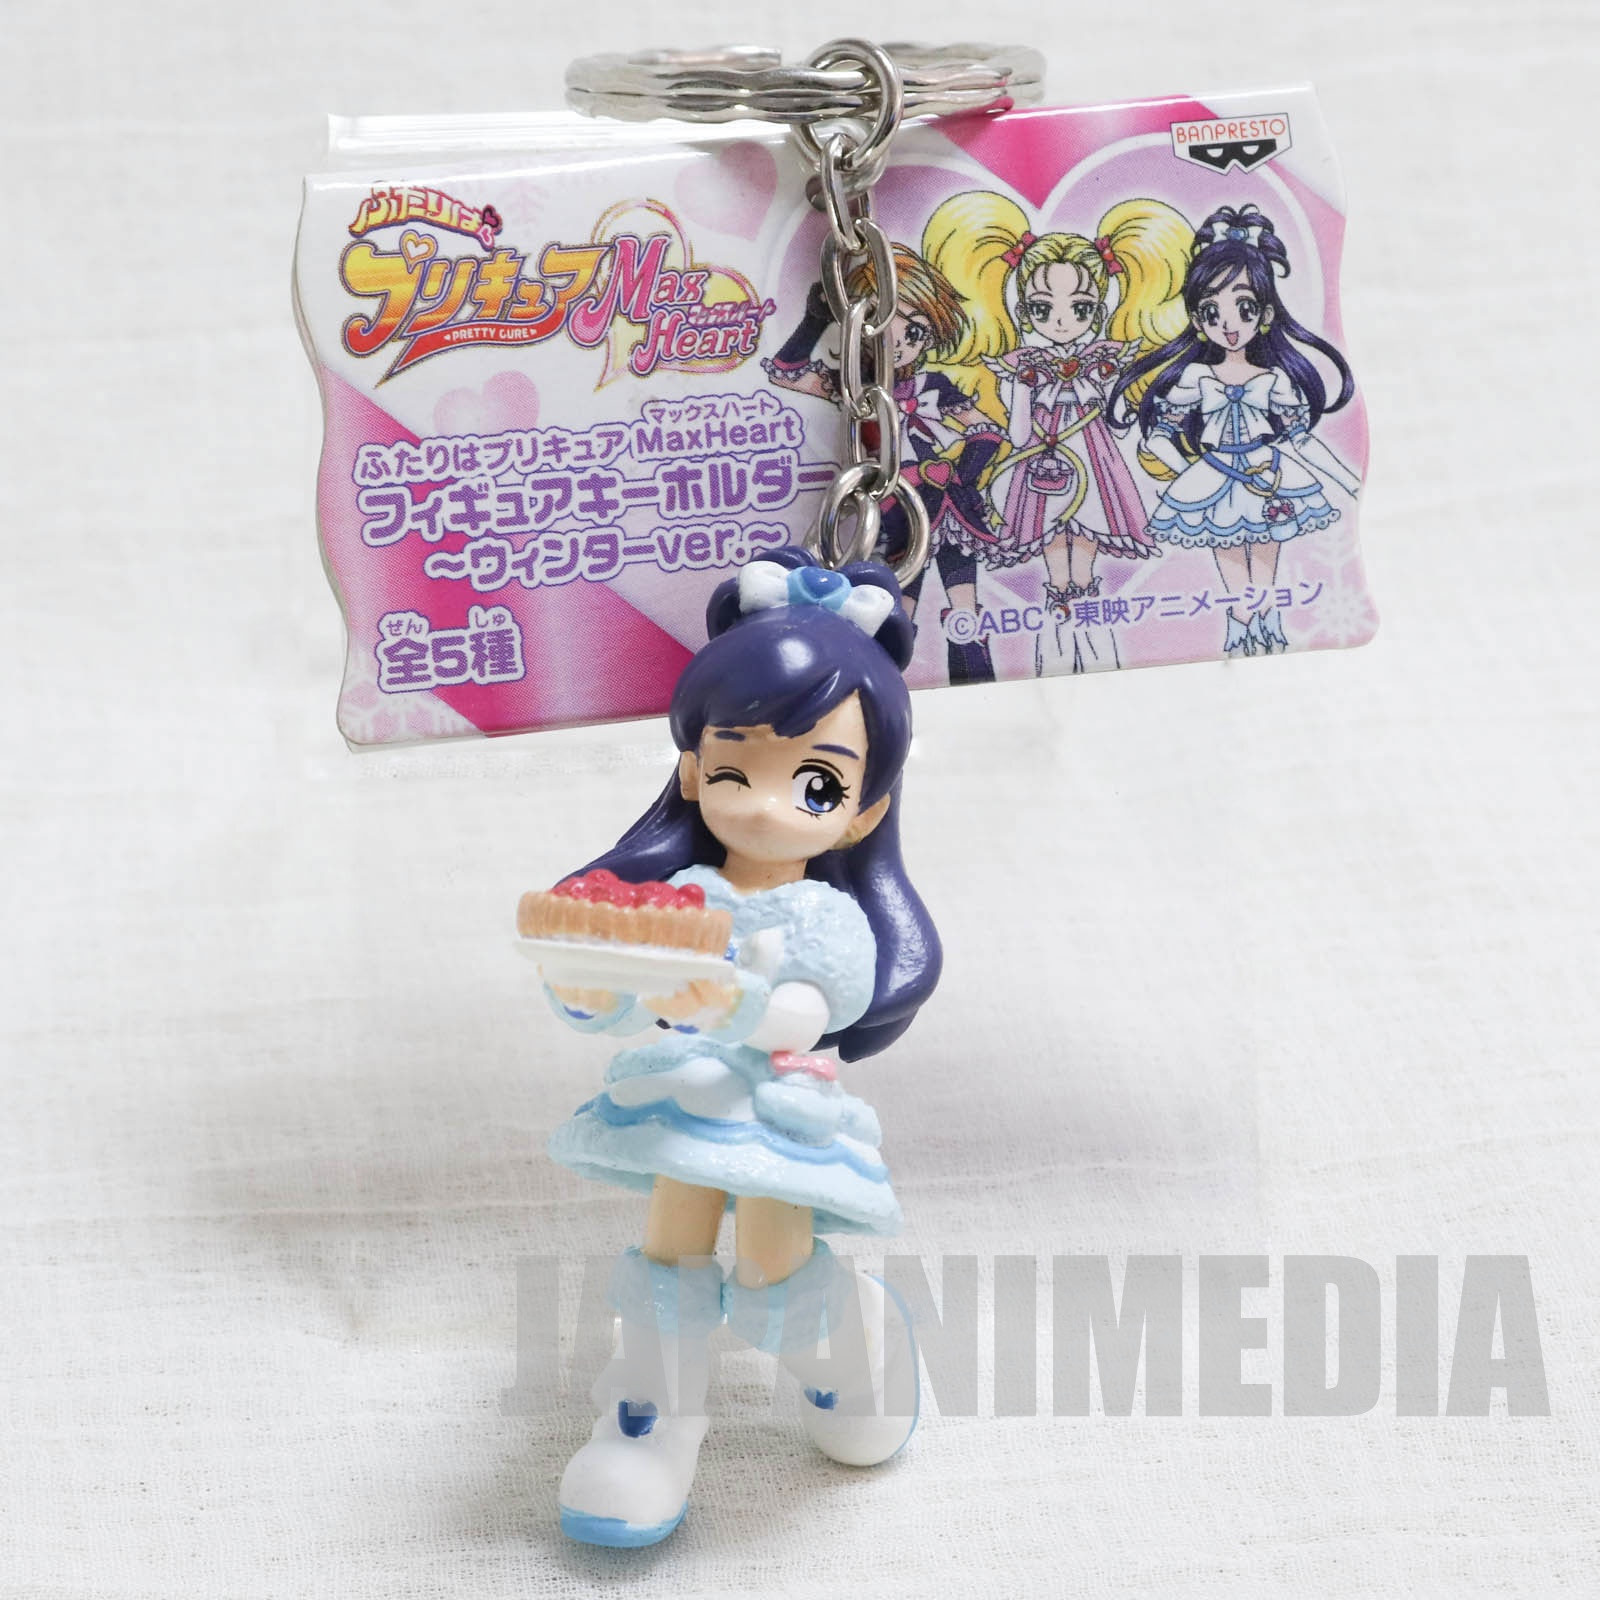 Futari wa Pretty Cure Max Heart Cure White Figure Keychain - Wintter ver. - JAPAN